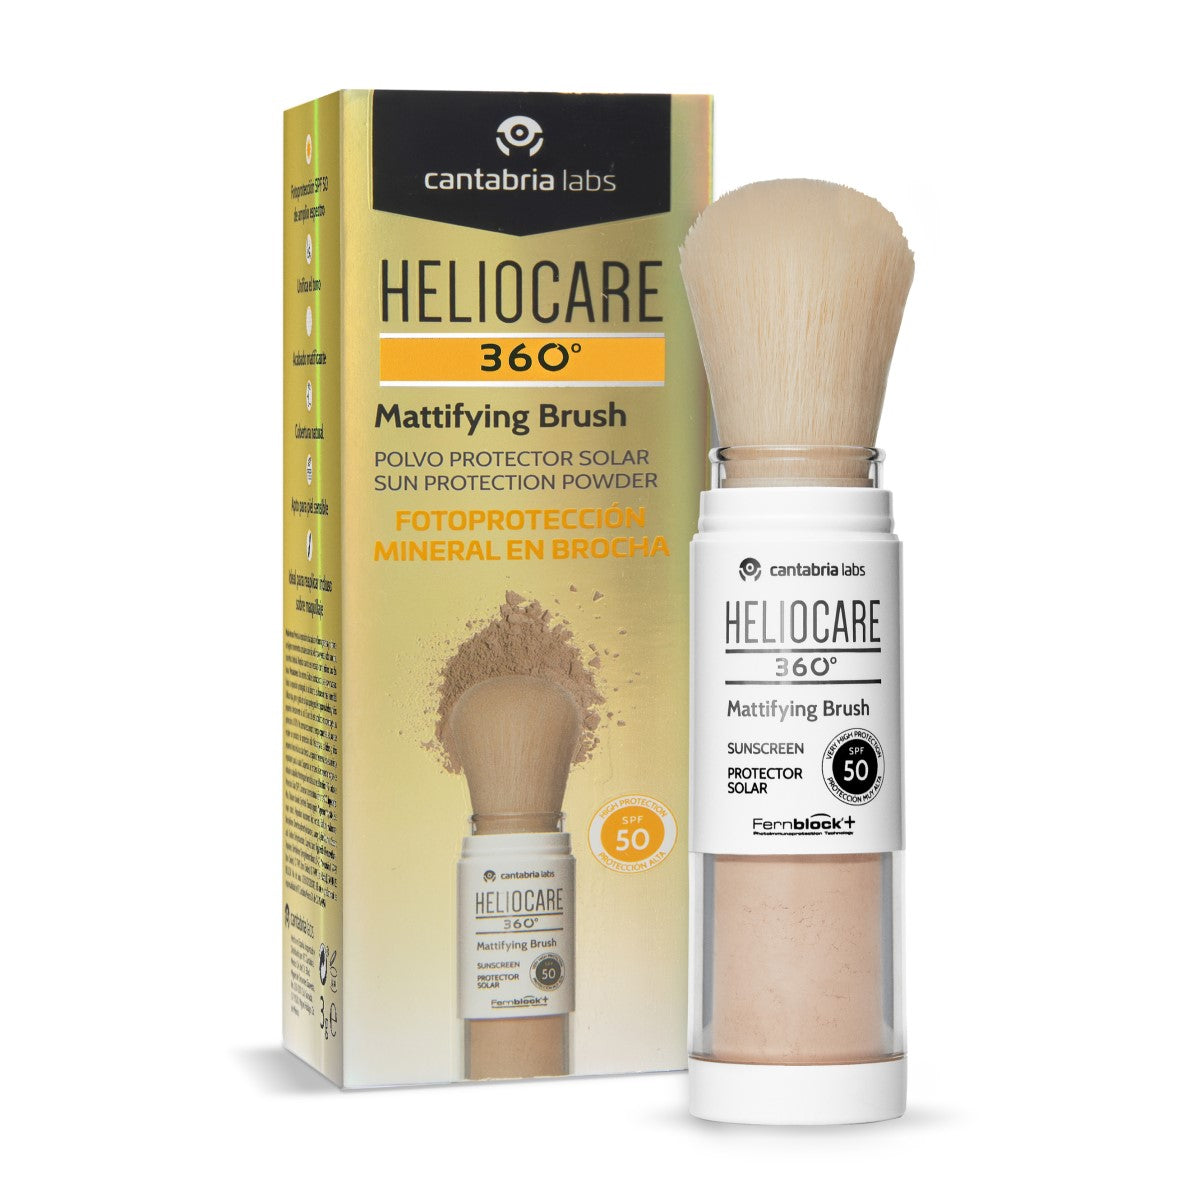 Heliocare 360° Mattifying Brush